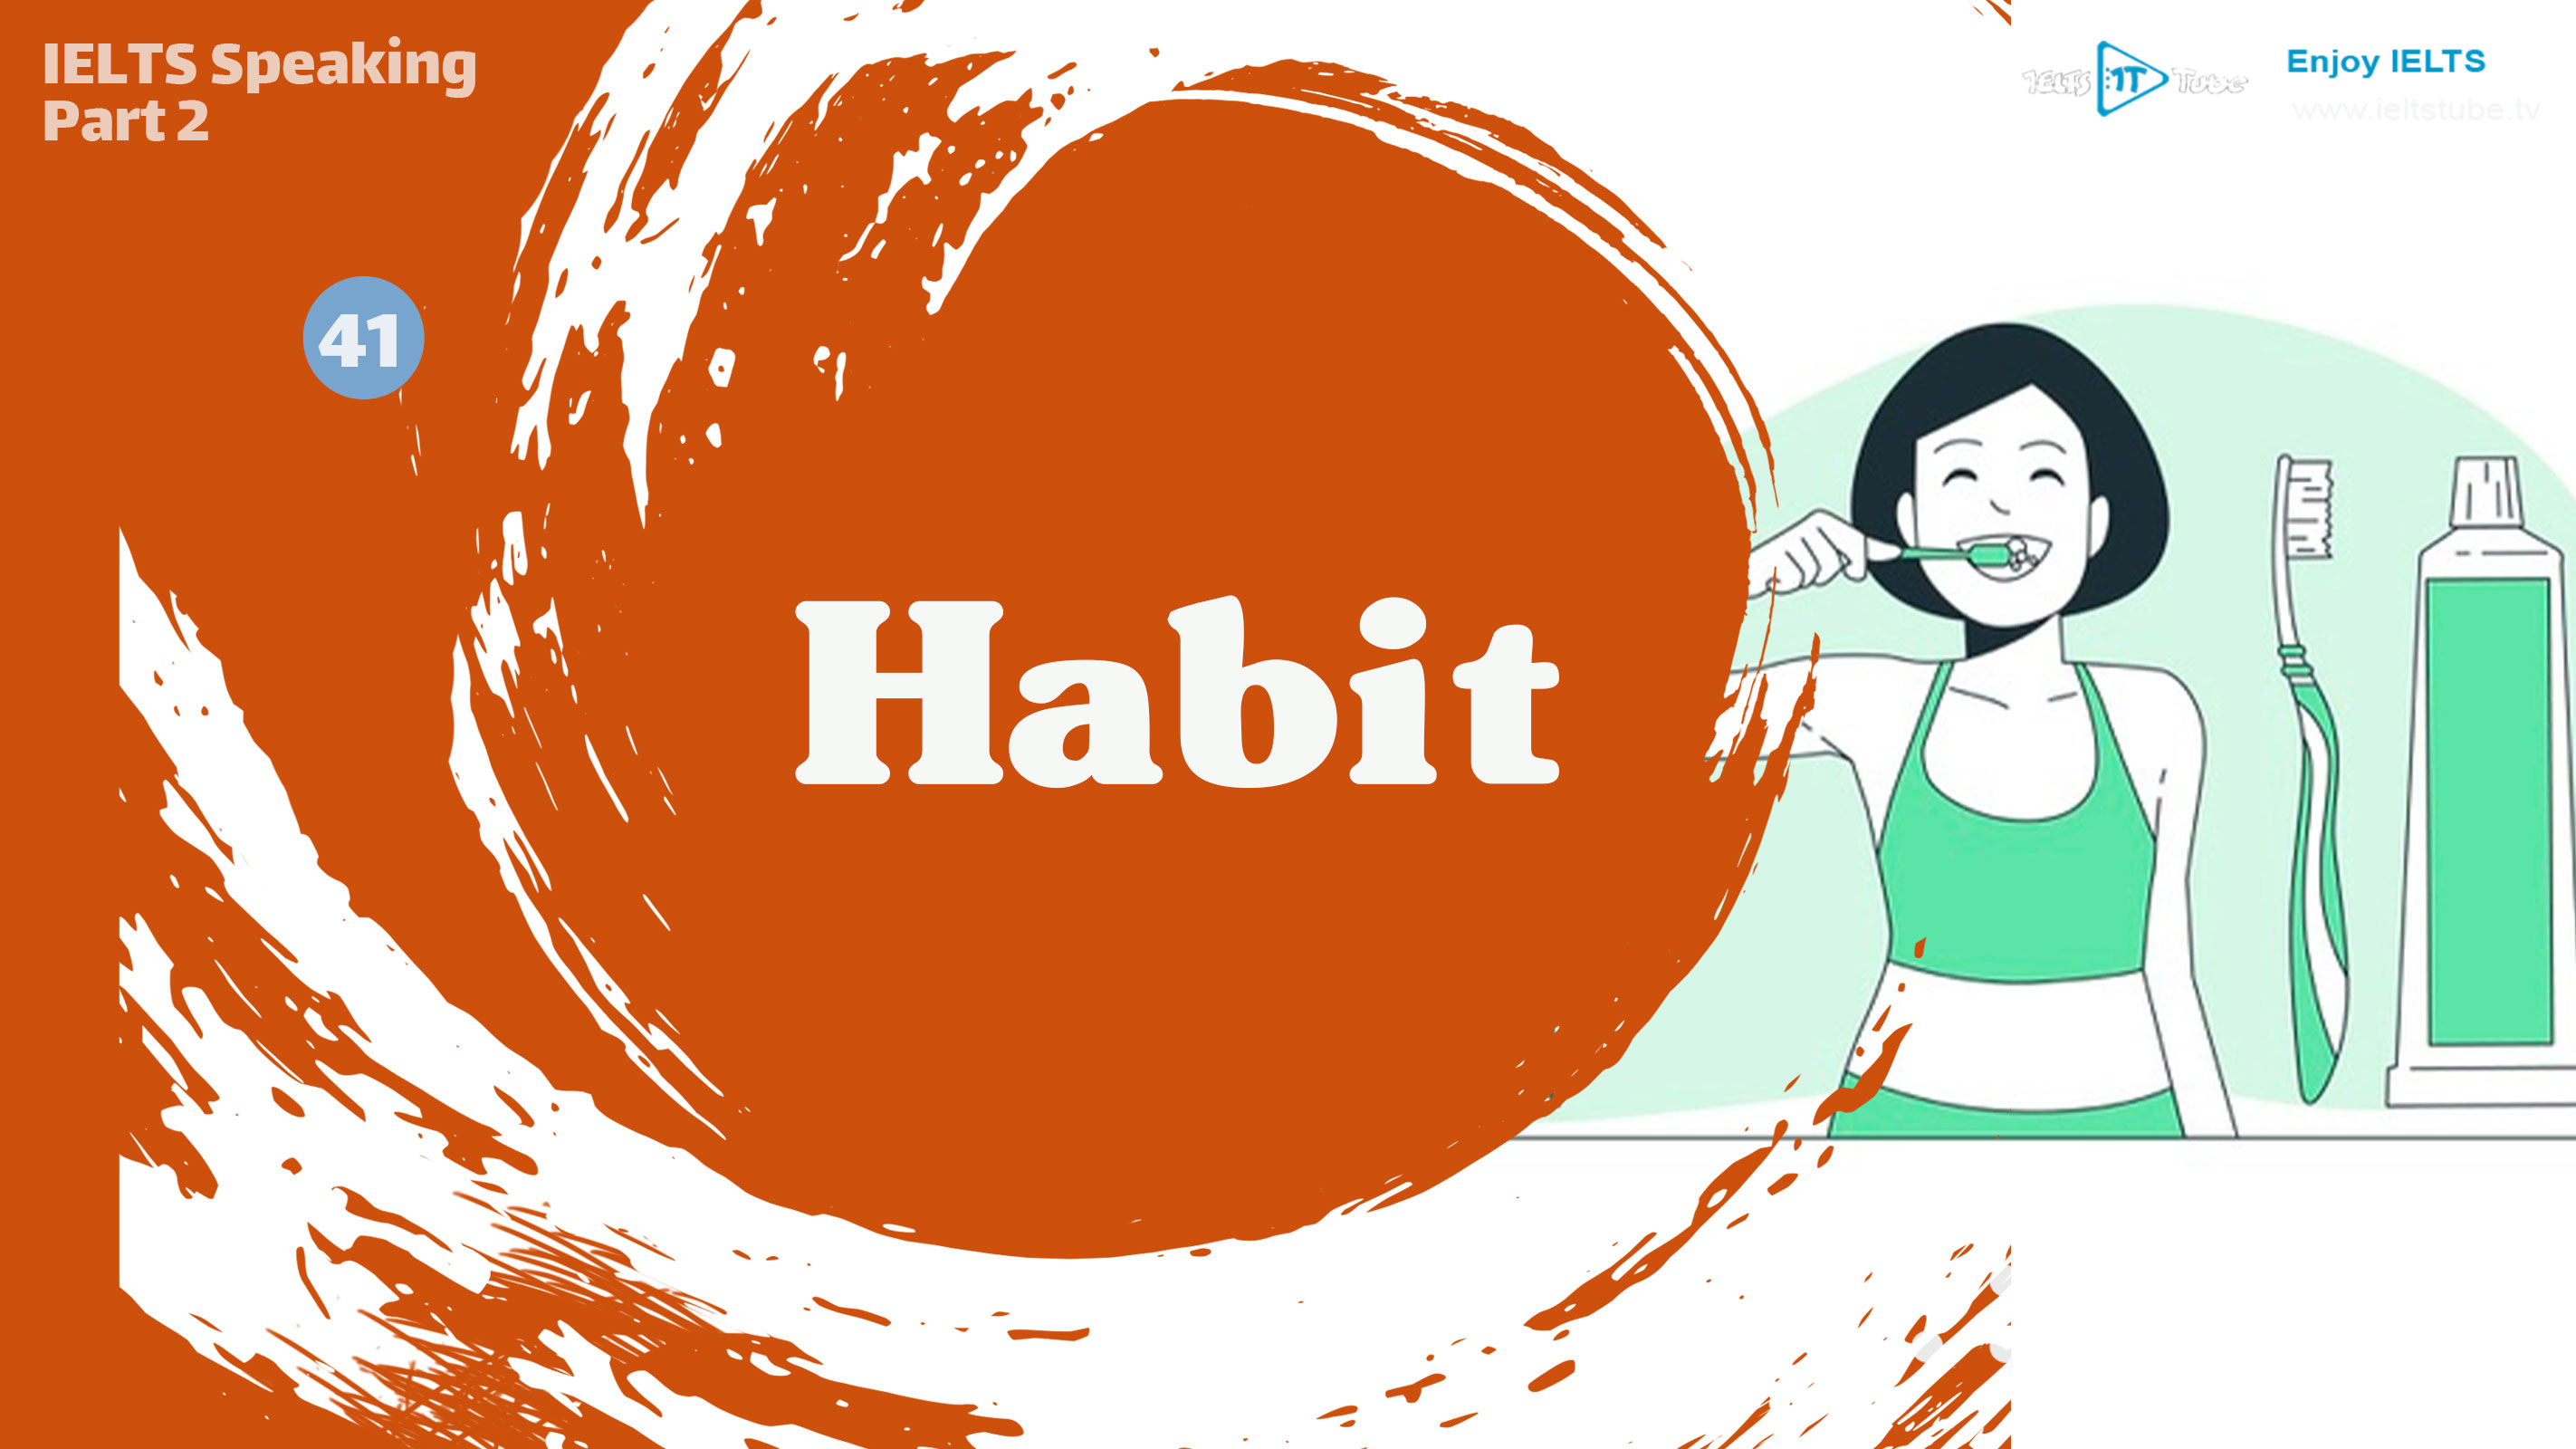 Habit (Poster)